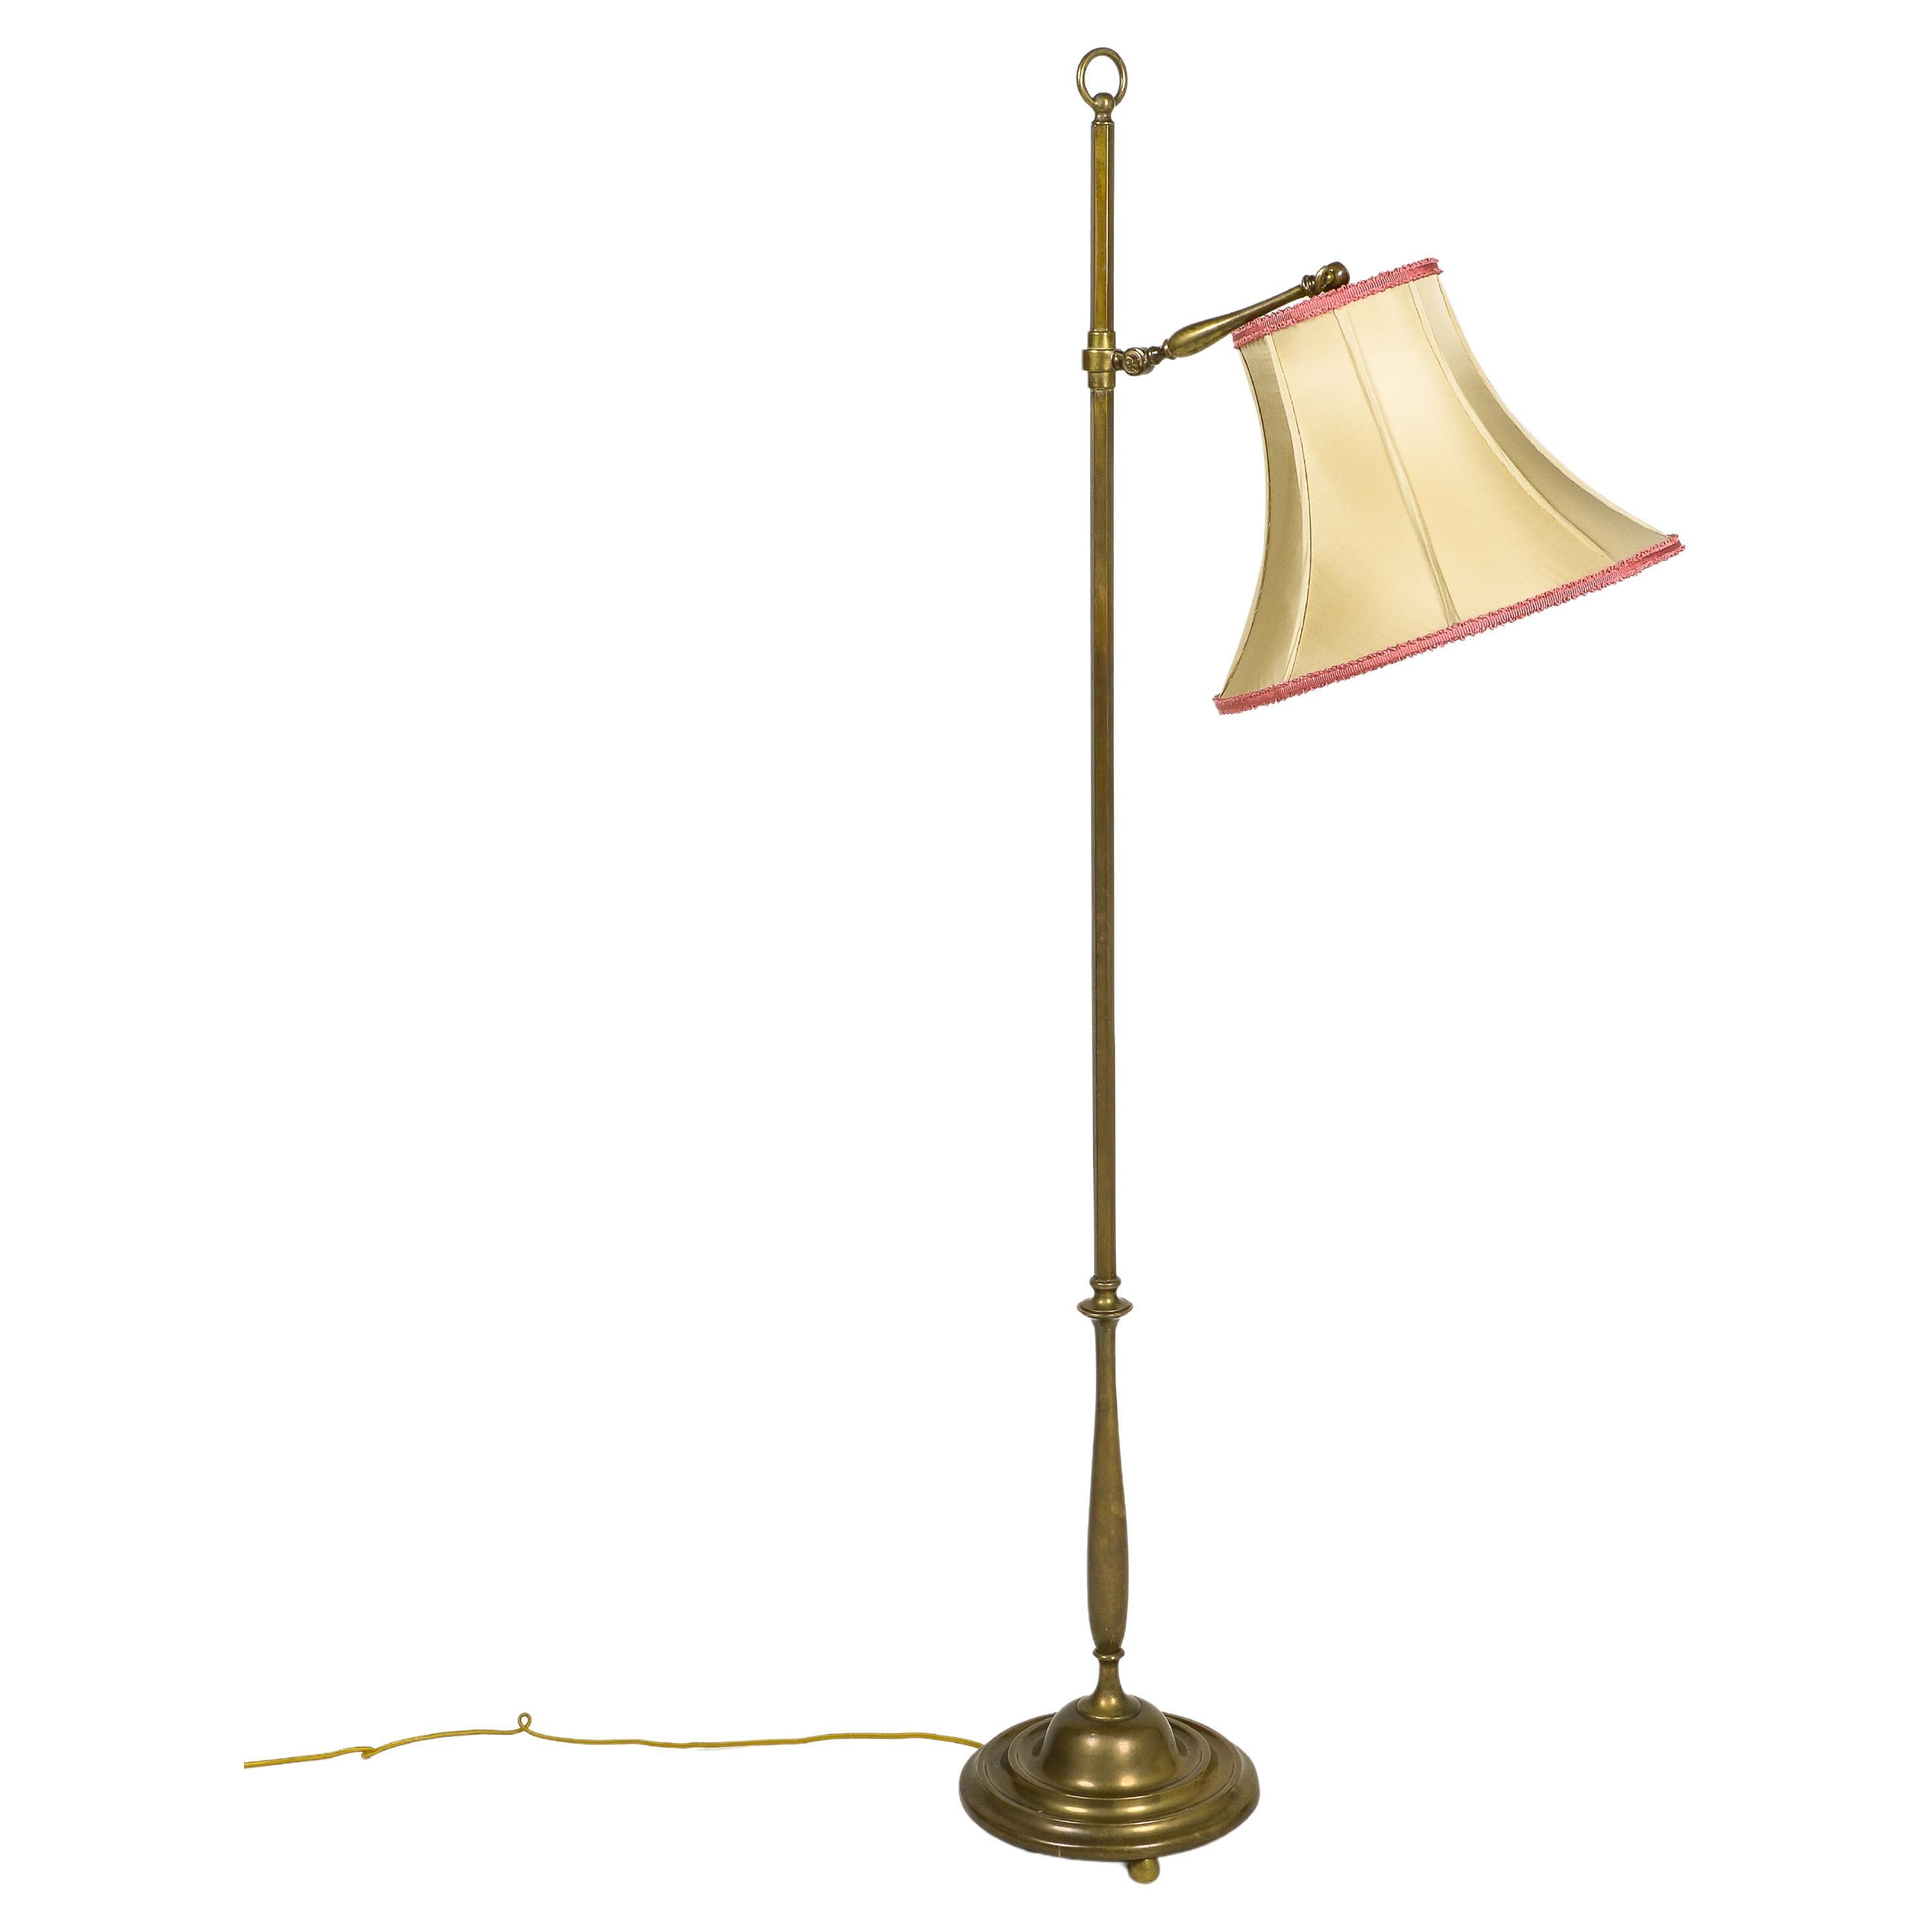 Antiqued Solid Brass Floor Lamp